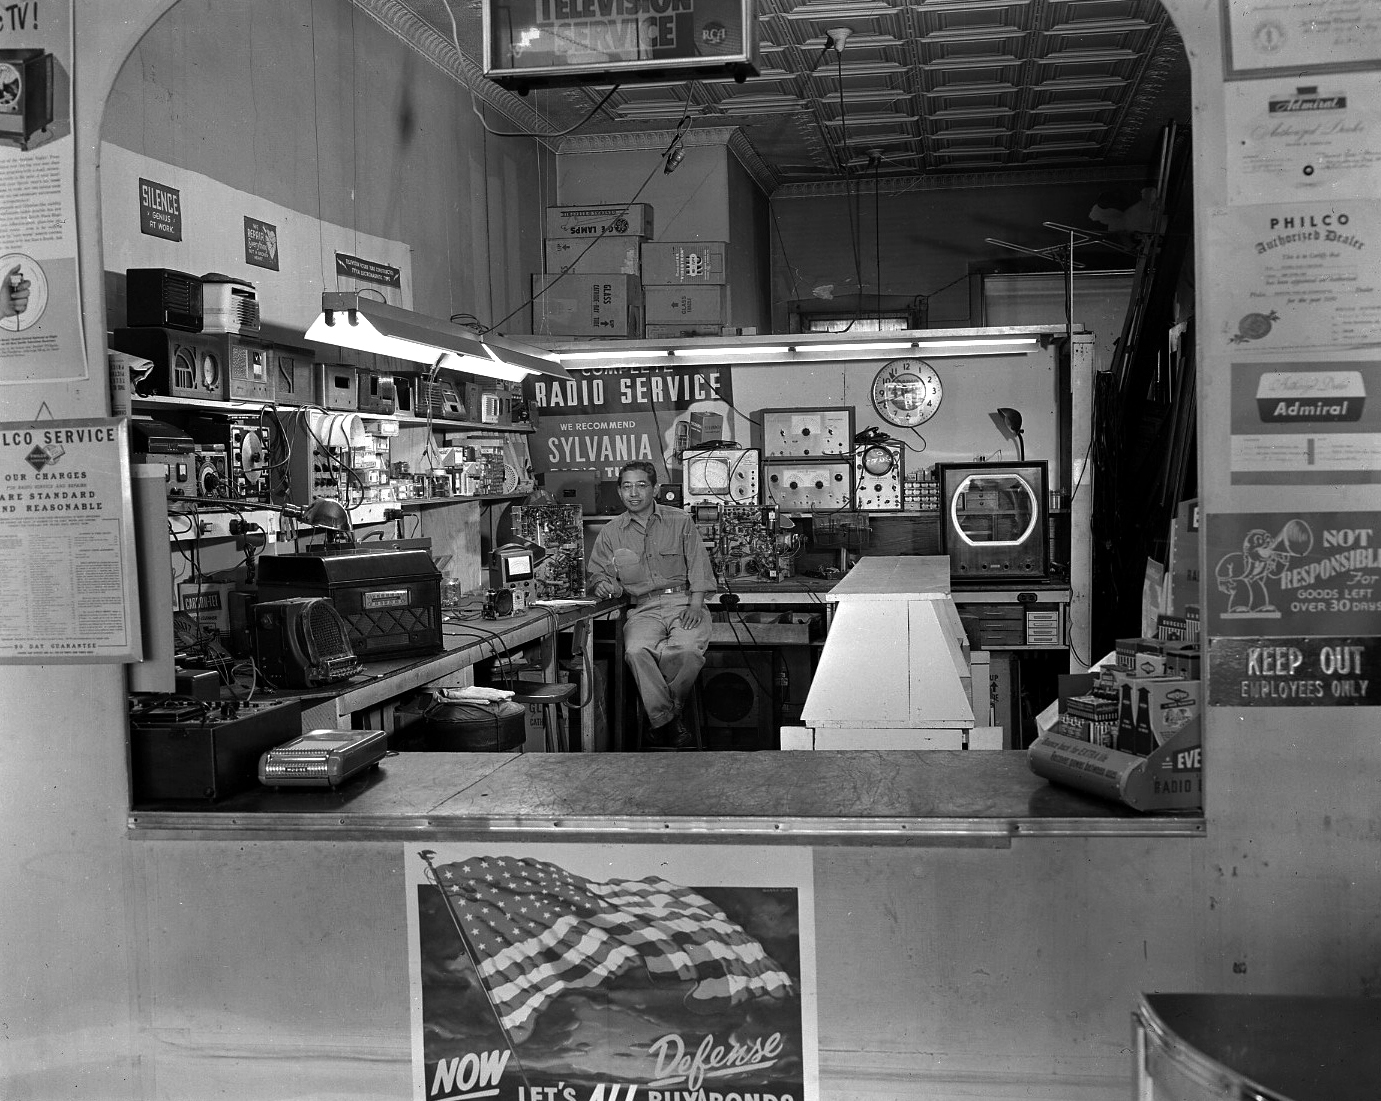 Philco Service shop, ca. 1950.